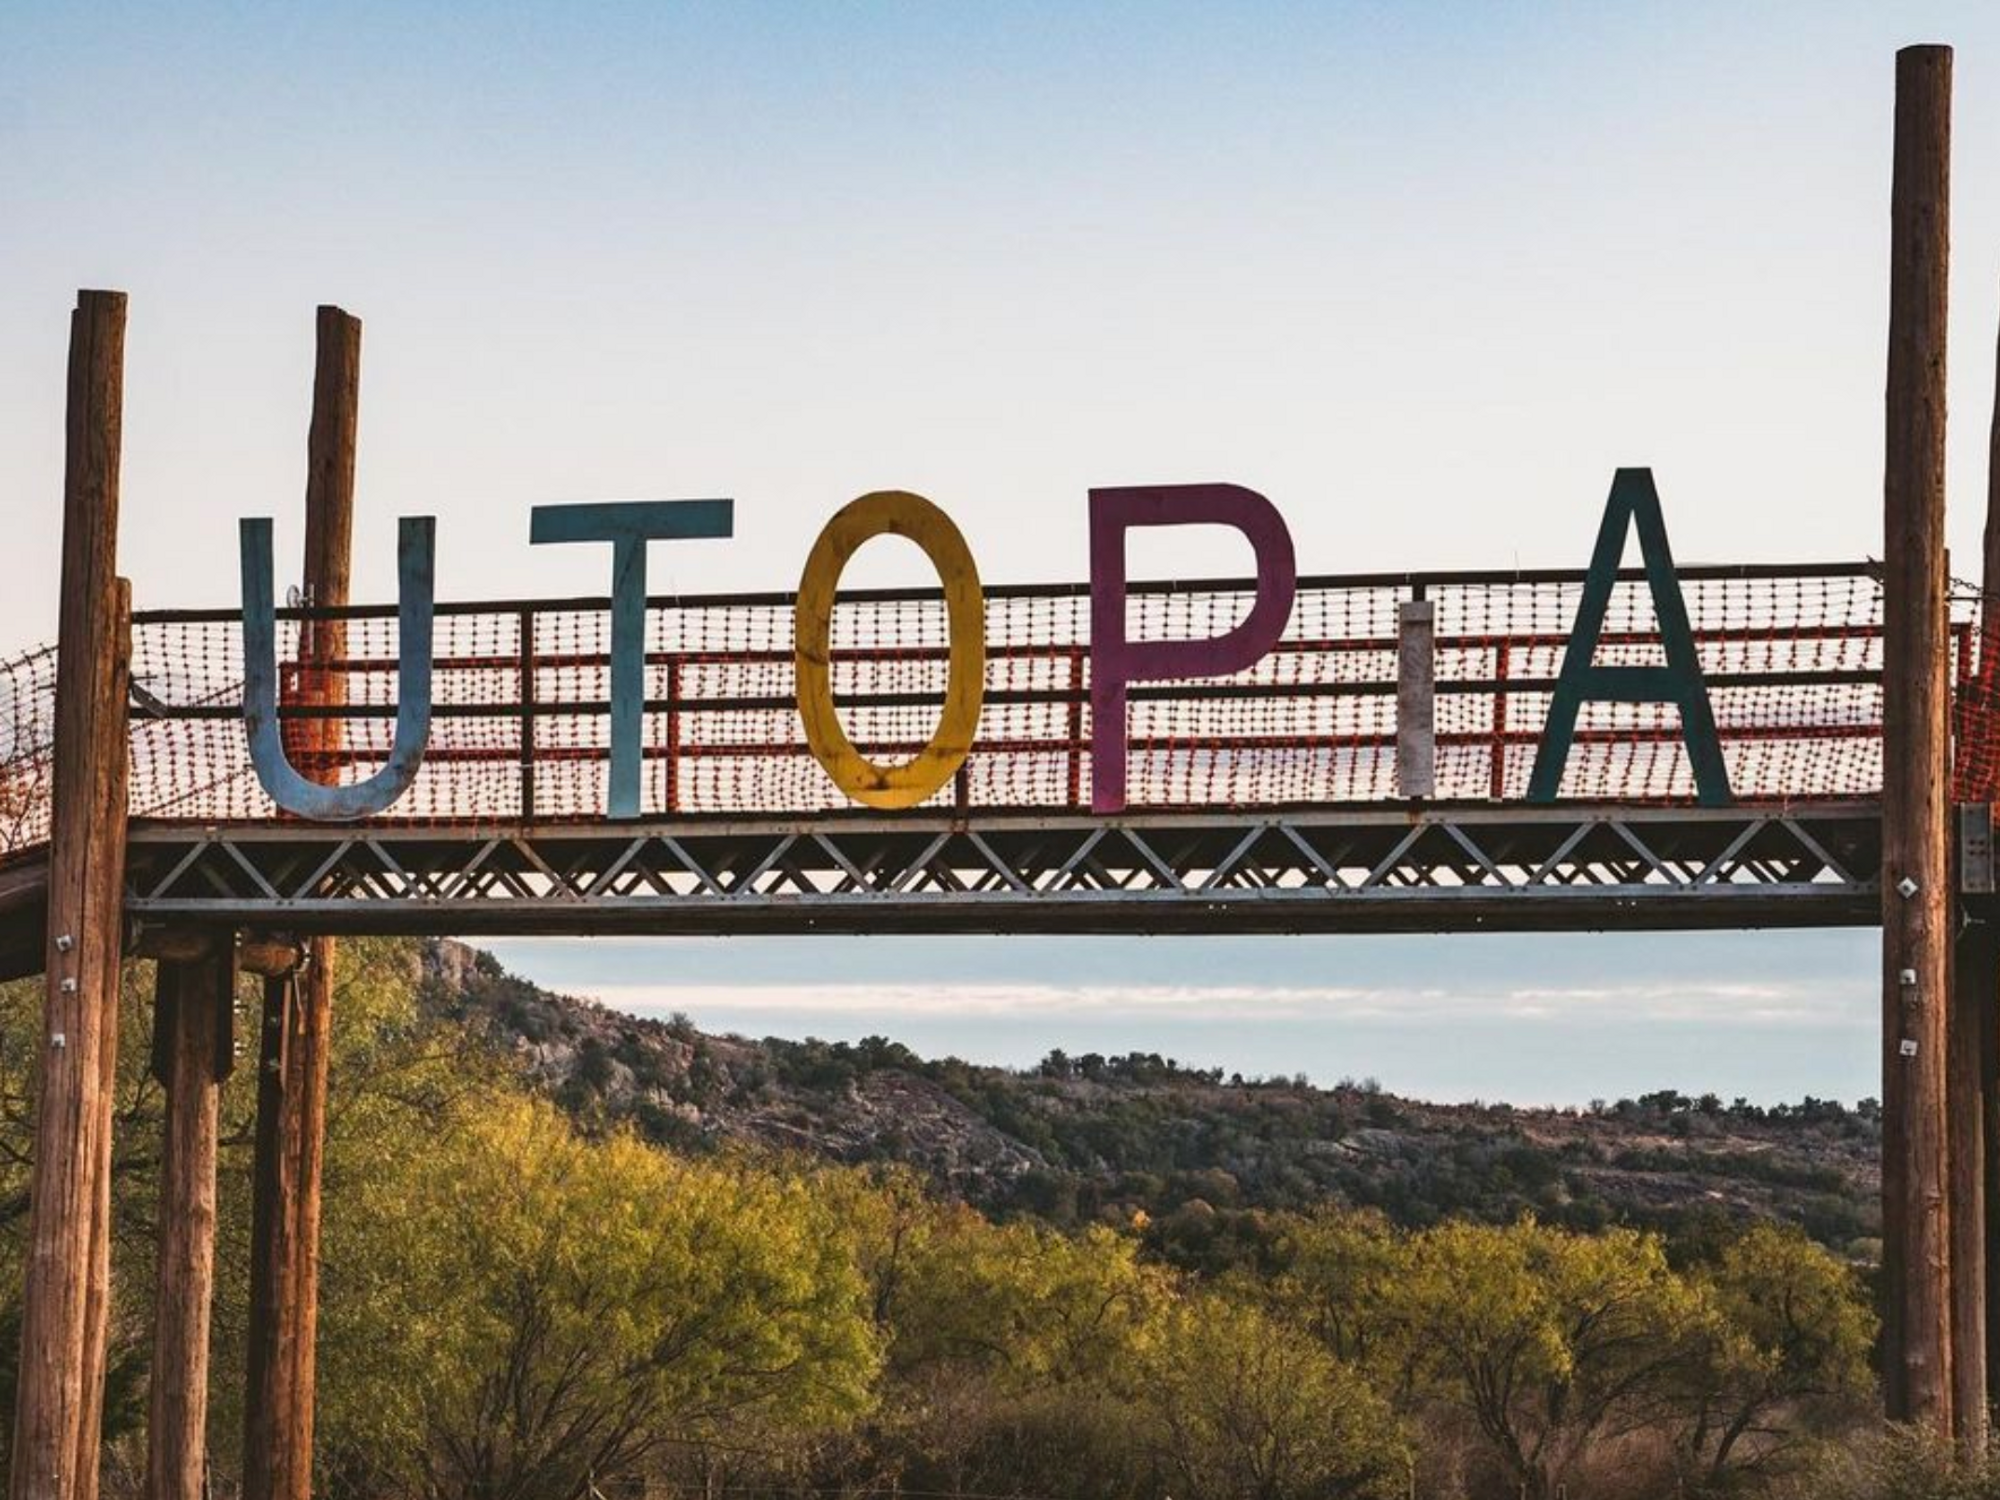 Utopia, Texas sign